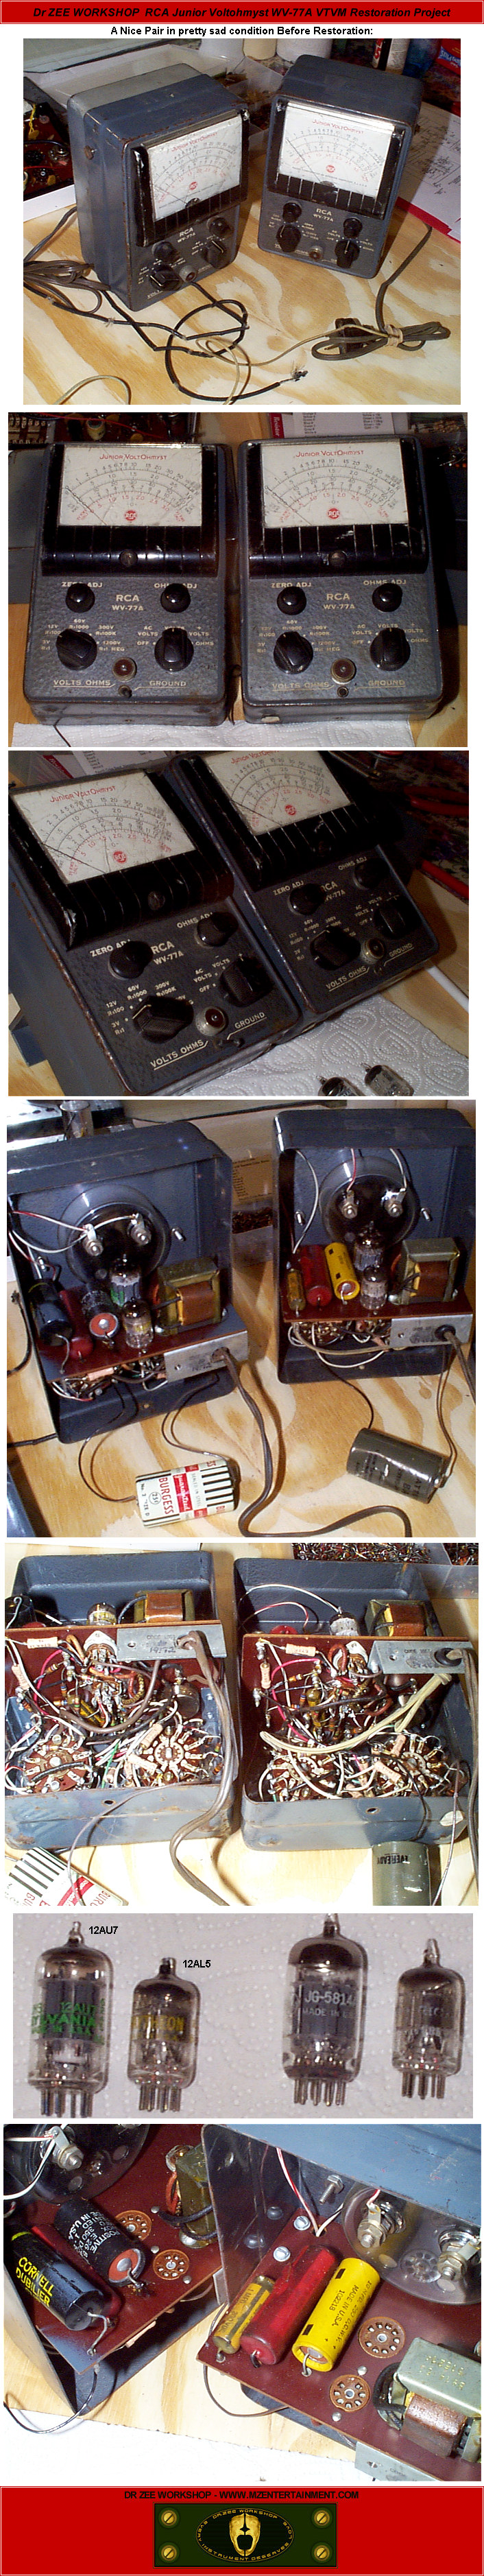 RCA VoltOhmyst Test Meter Model WV-77E DC AC Volt Ohm Multimeter Powers On  5x8